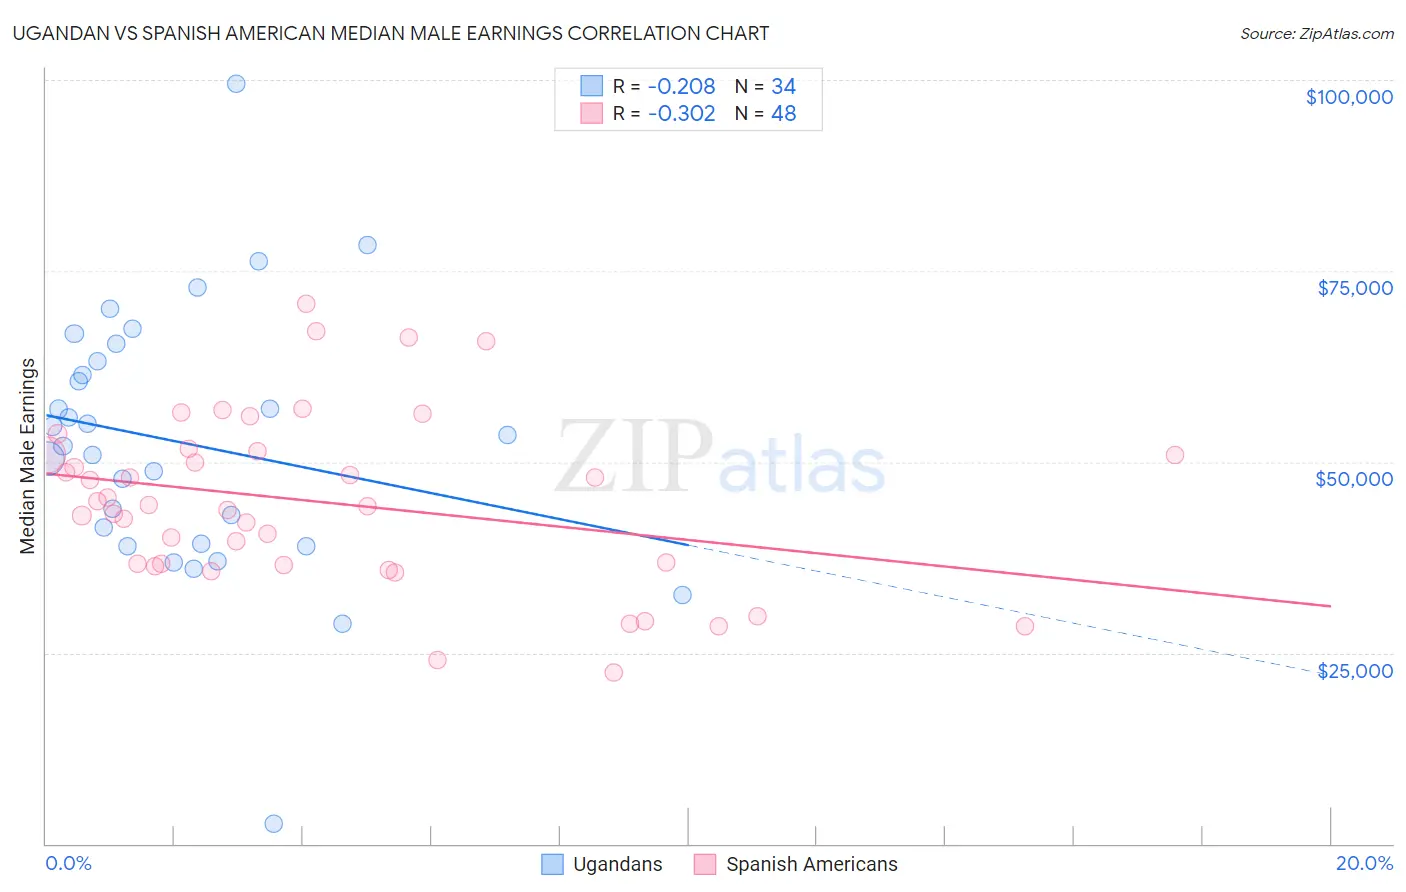 Ugandan vs Spanish American Median Male Earnings